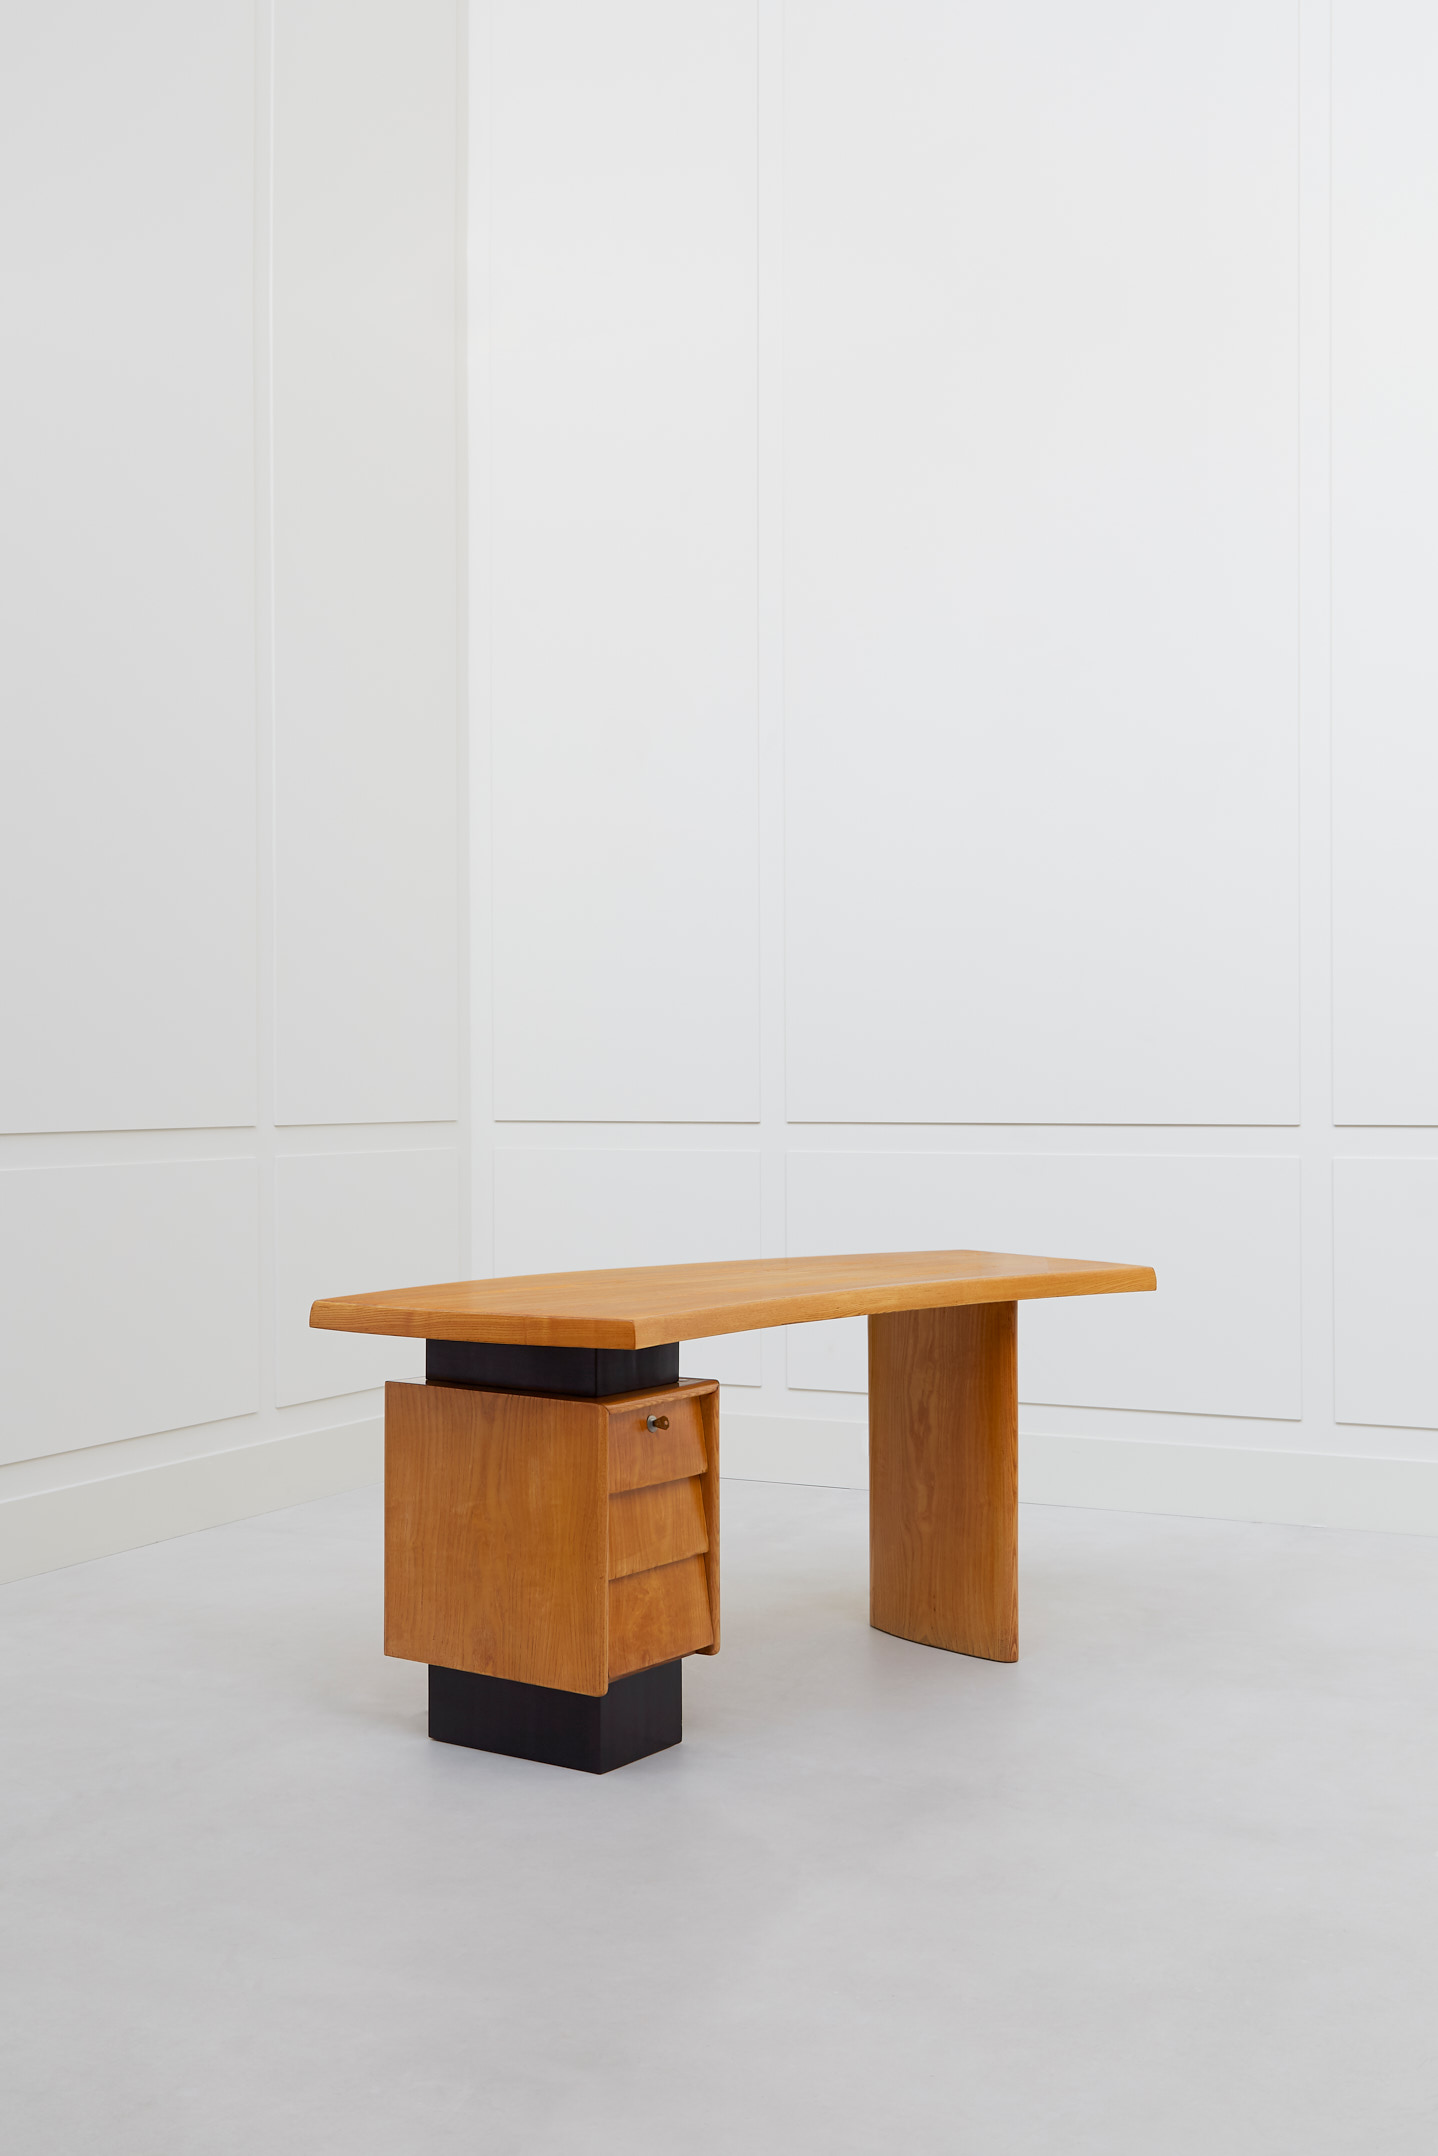 Charlotte Perriand & Pierre Jeanneret, Desk model n°9, vue 02